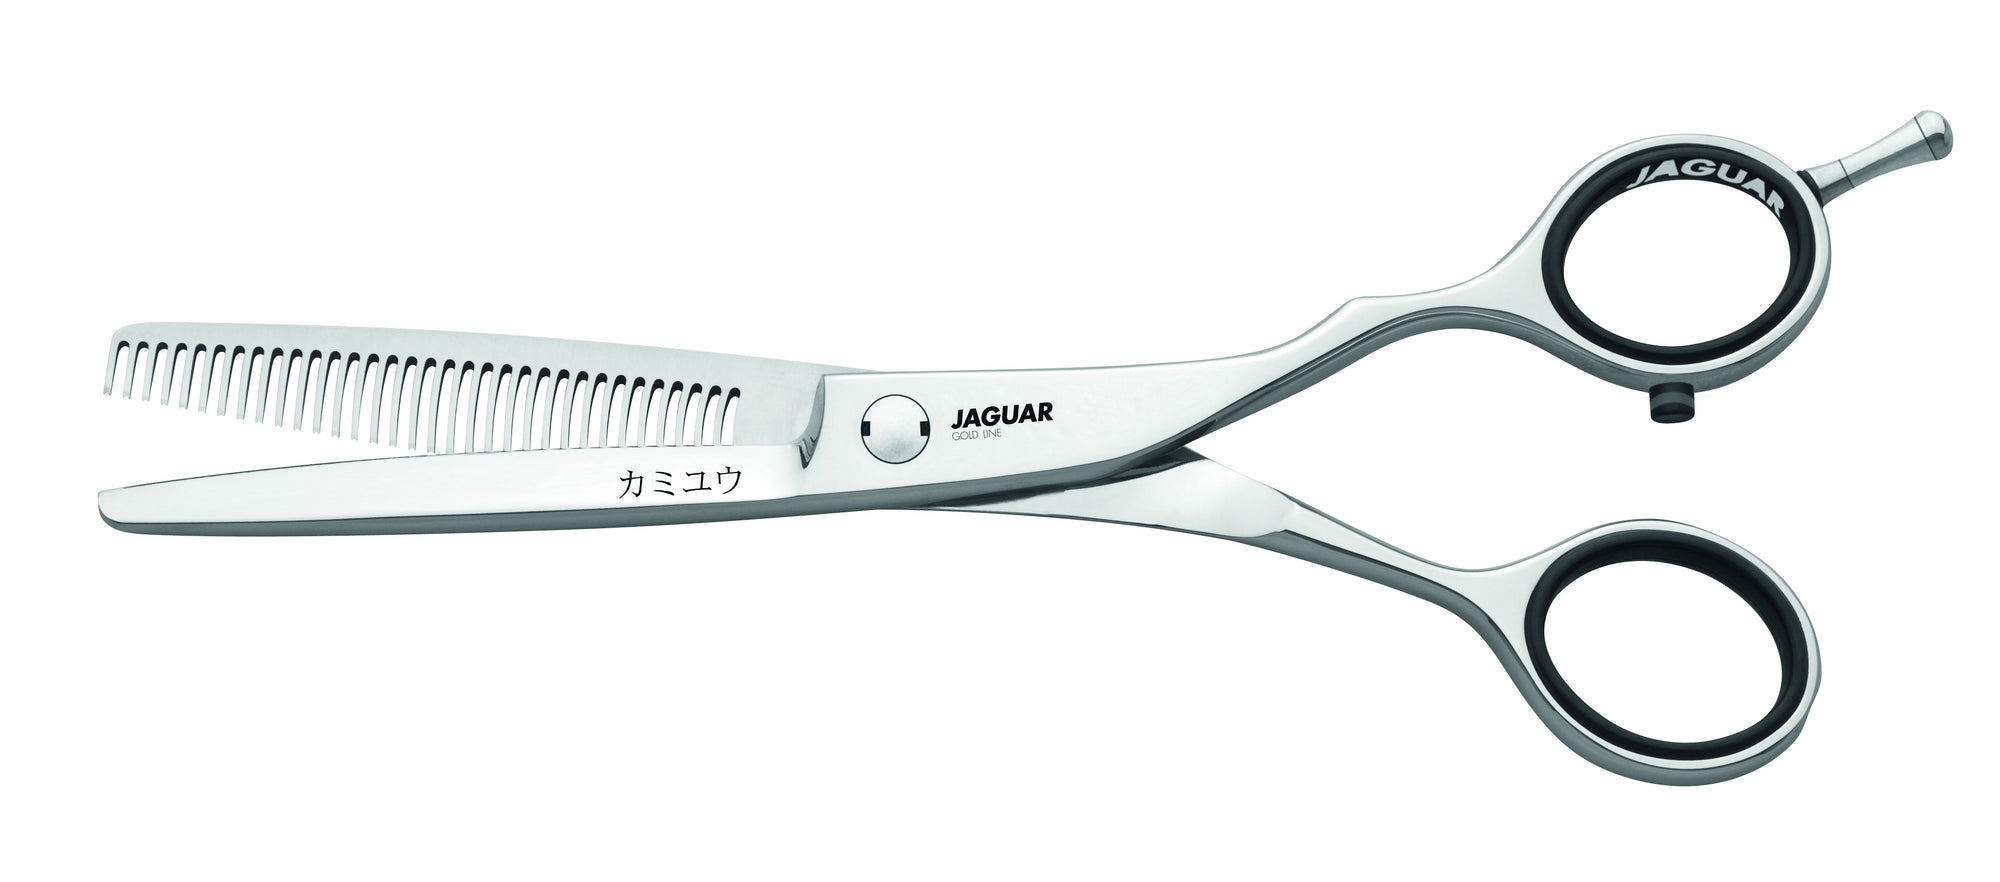 Jaguar Kamiyu 6 inch 33 Tooth Thinners (6949713903699)